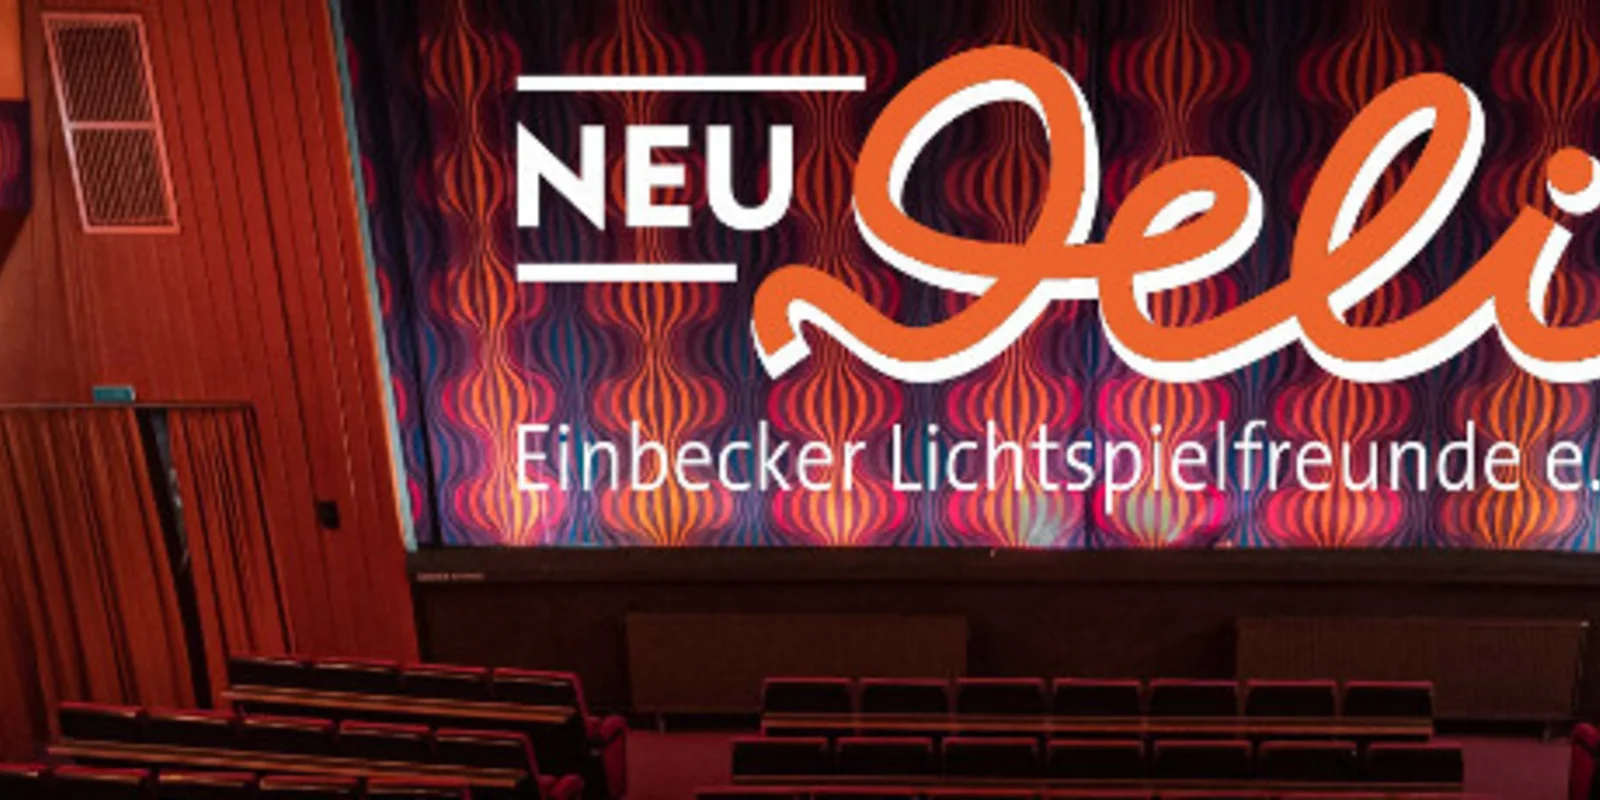 Innenansicht Kinosaal und Neu-Deli Logo